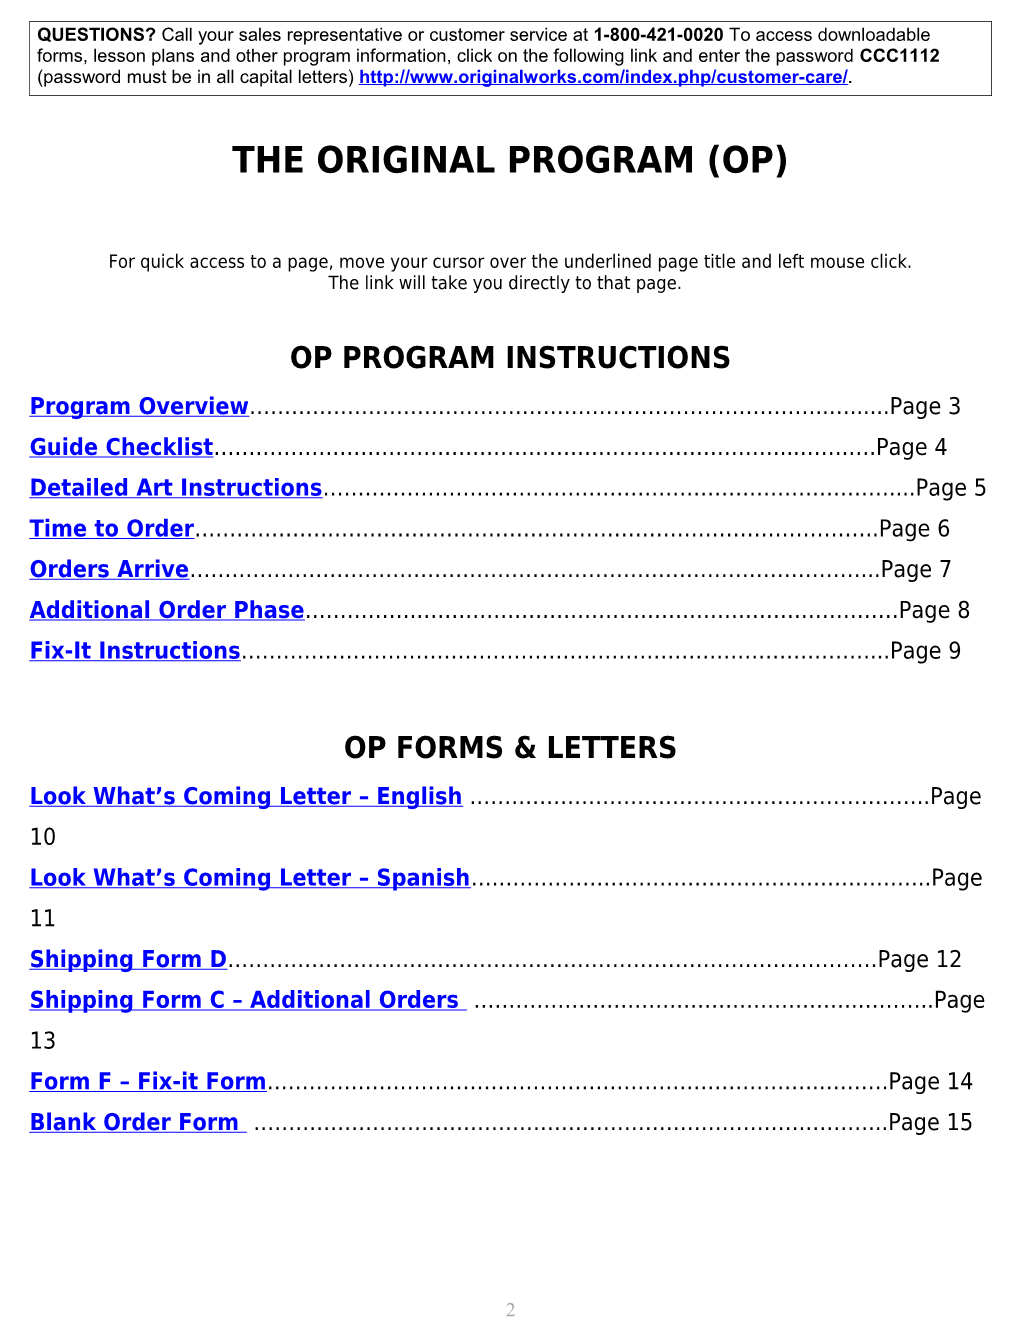 OP Guide Checklist